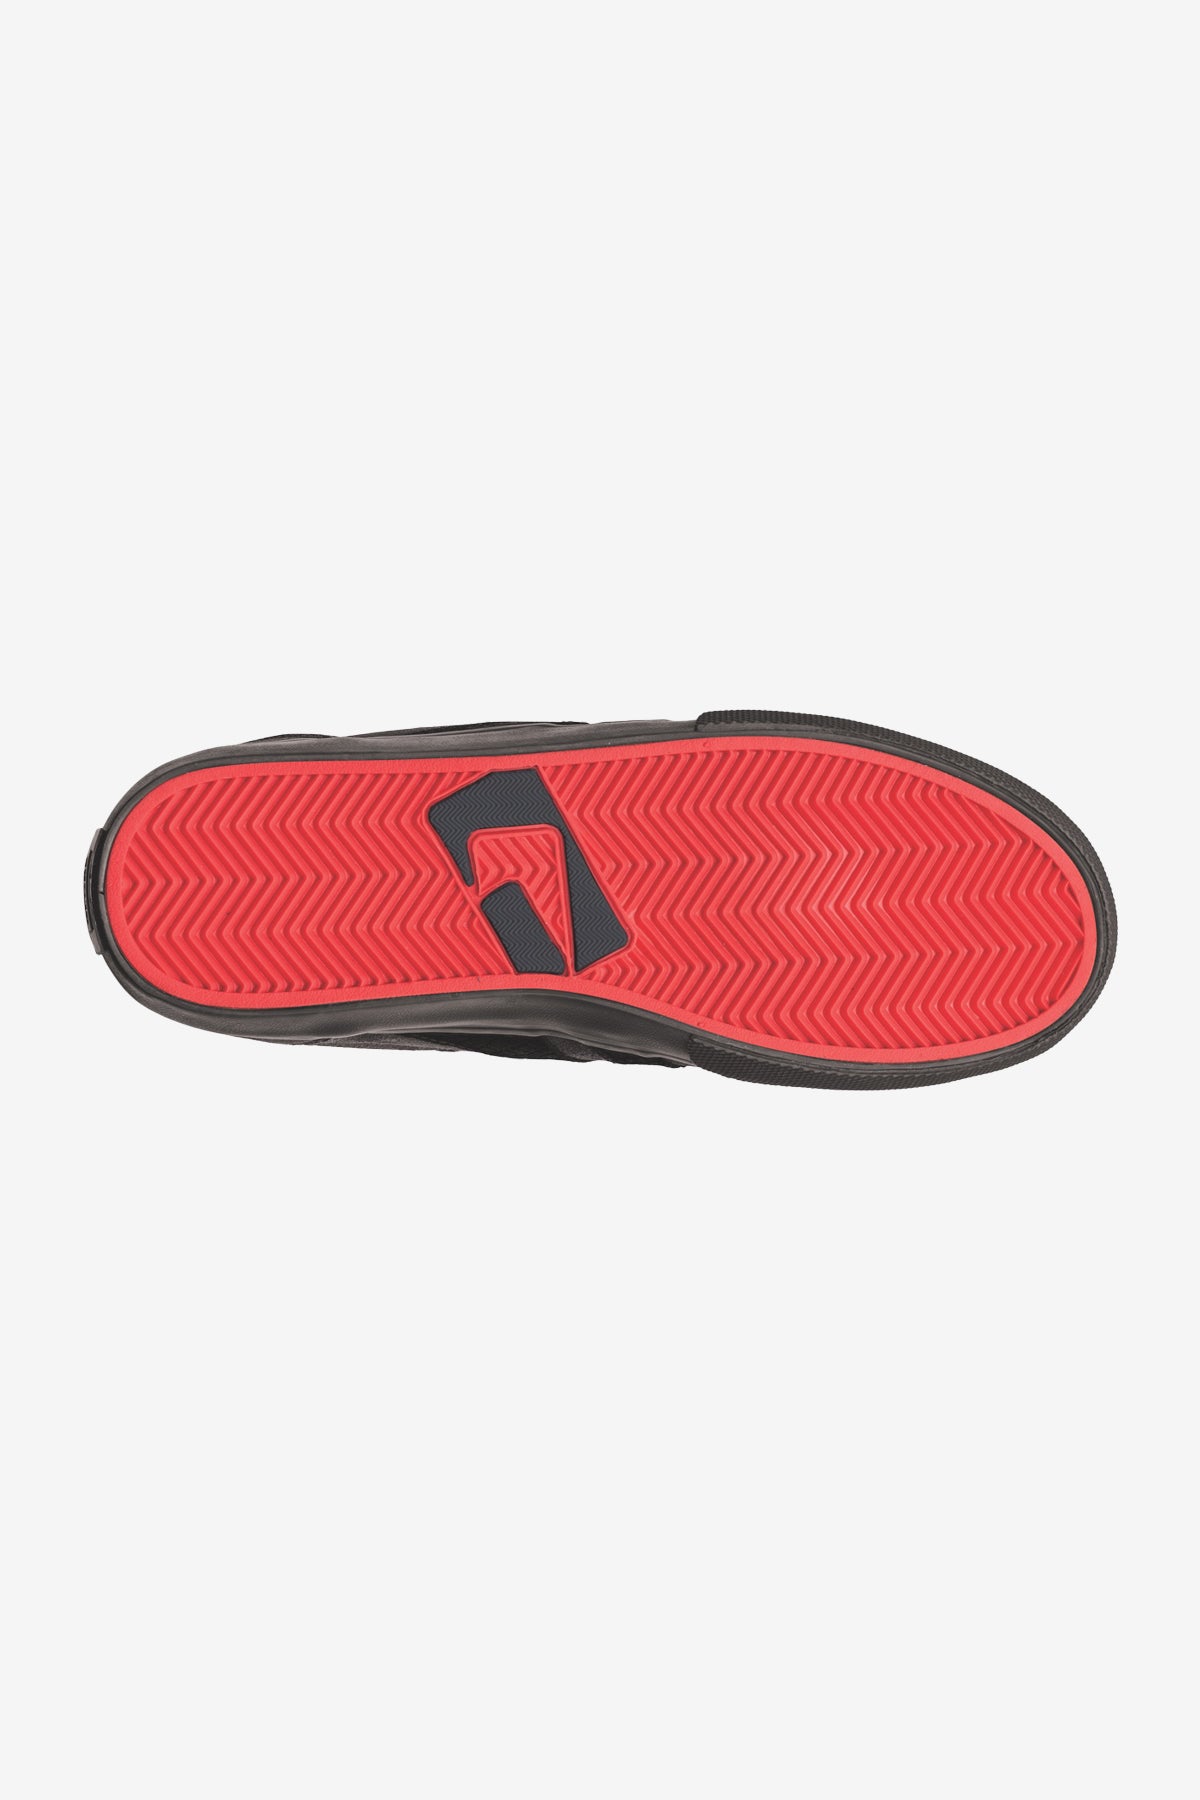 encore-2 nero skateboard scarpe